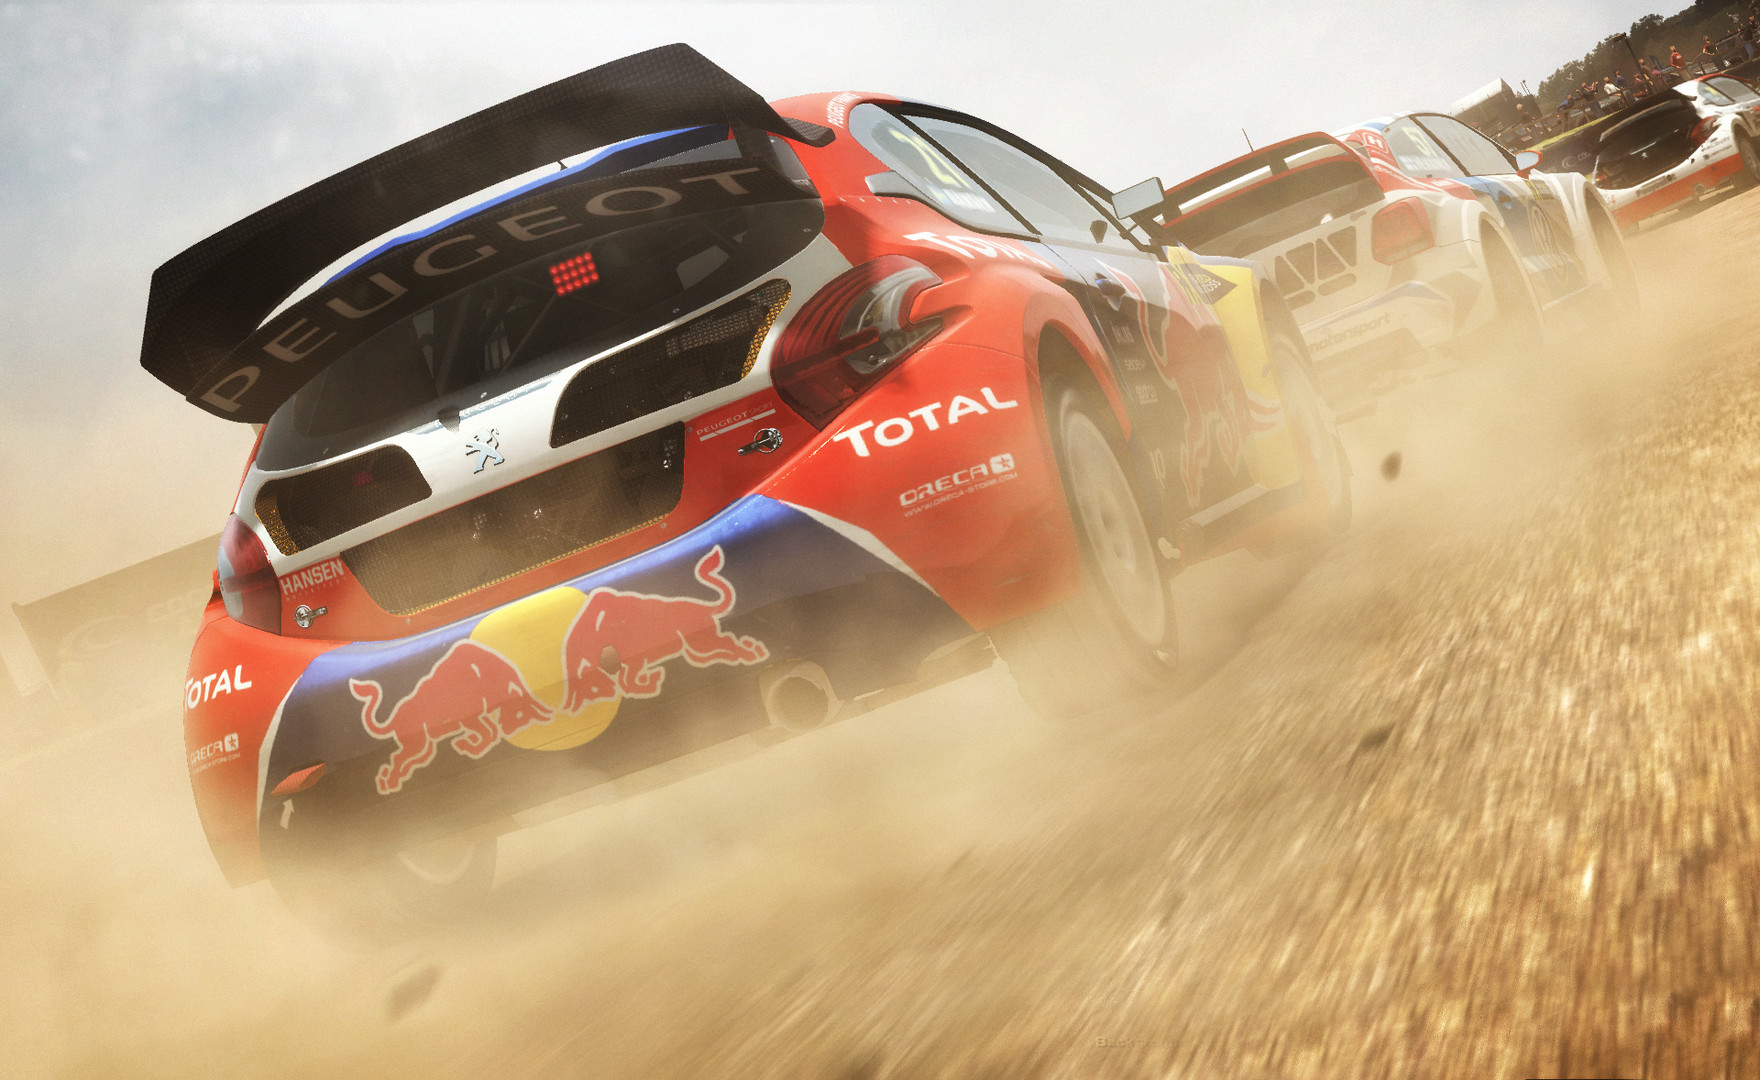 Vr rally. Dirt Rally 2.0 VR. Dirt Rally VR. Dirt Rally 2015. Dirt Rally 3.